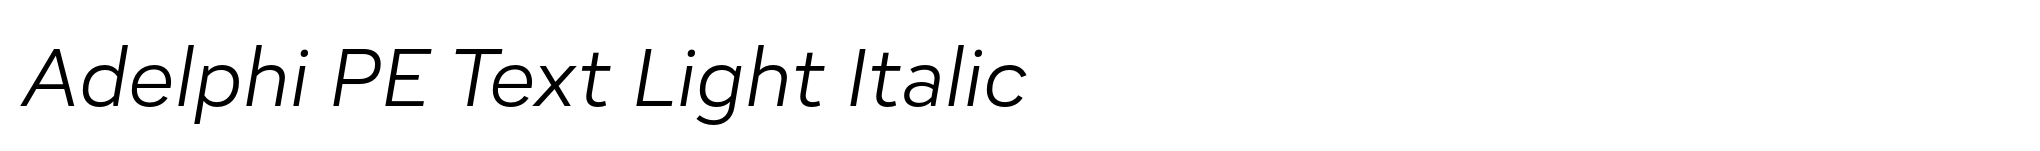 Adelphi PE Text Light Italic image